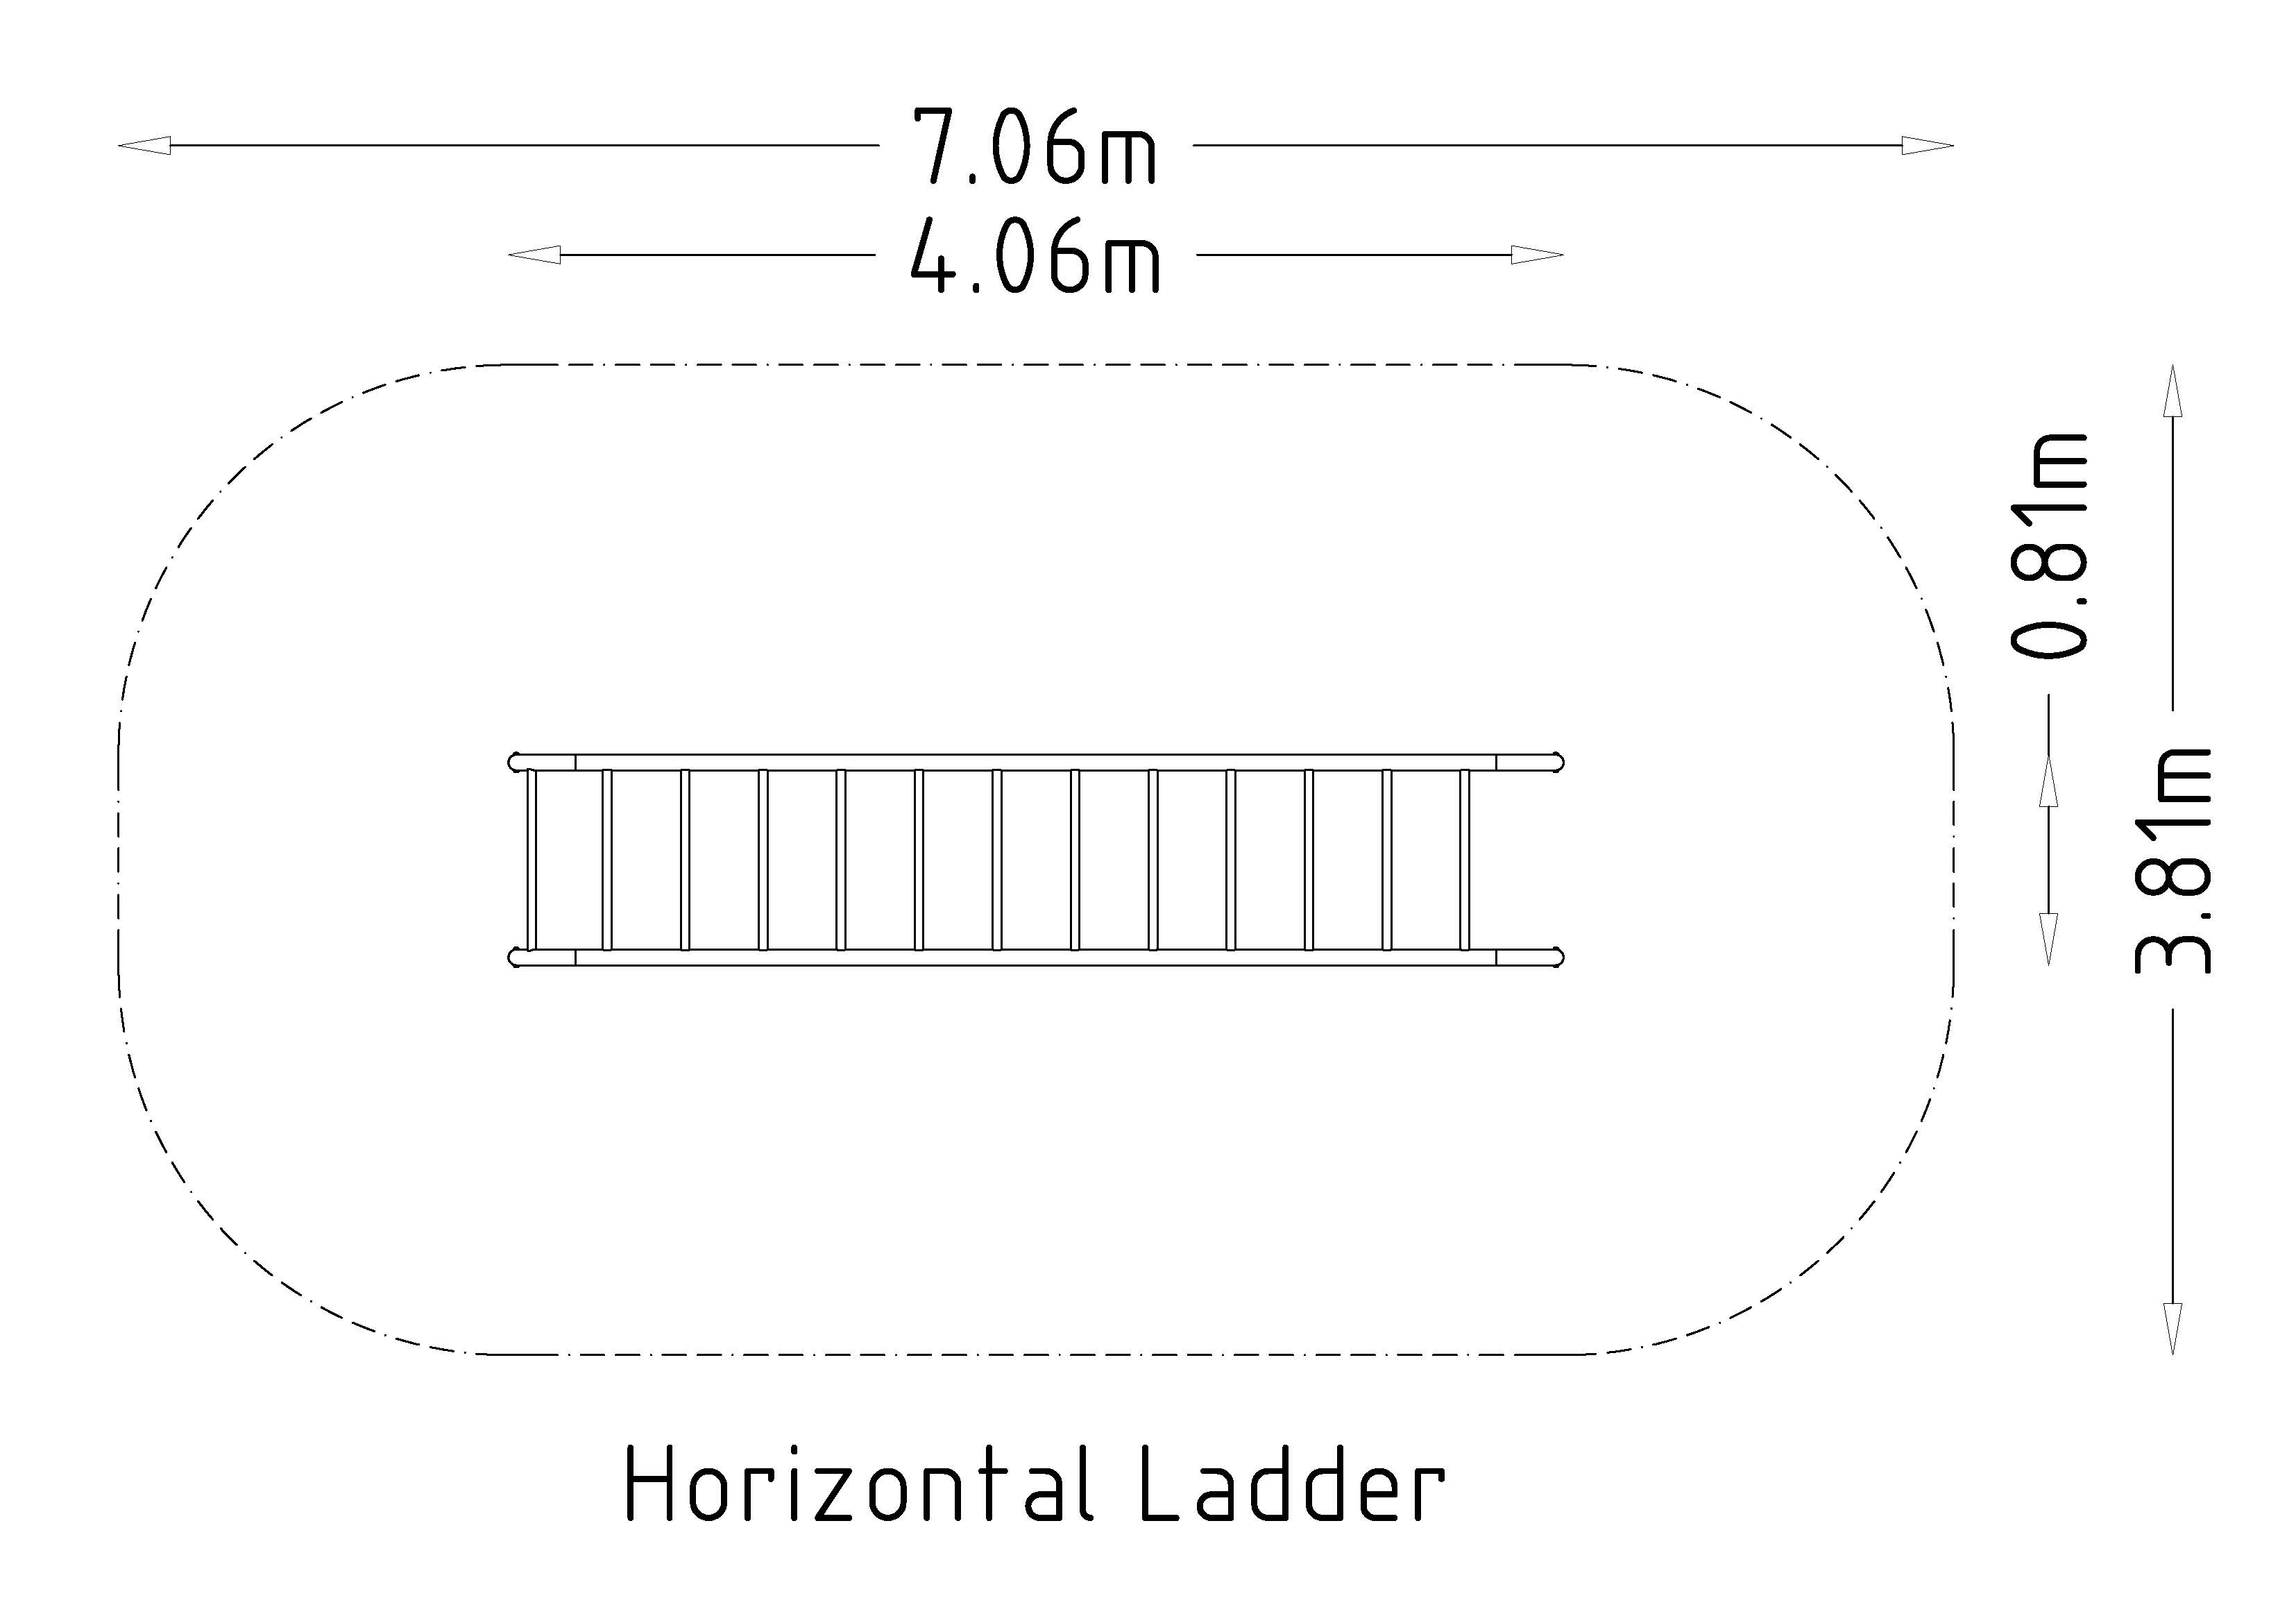 HAGS Horizontale ladder